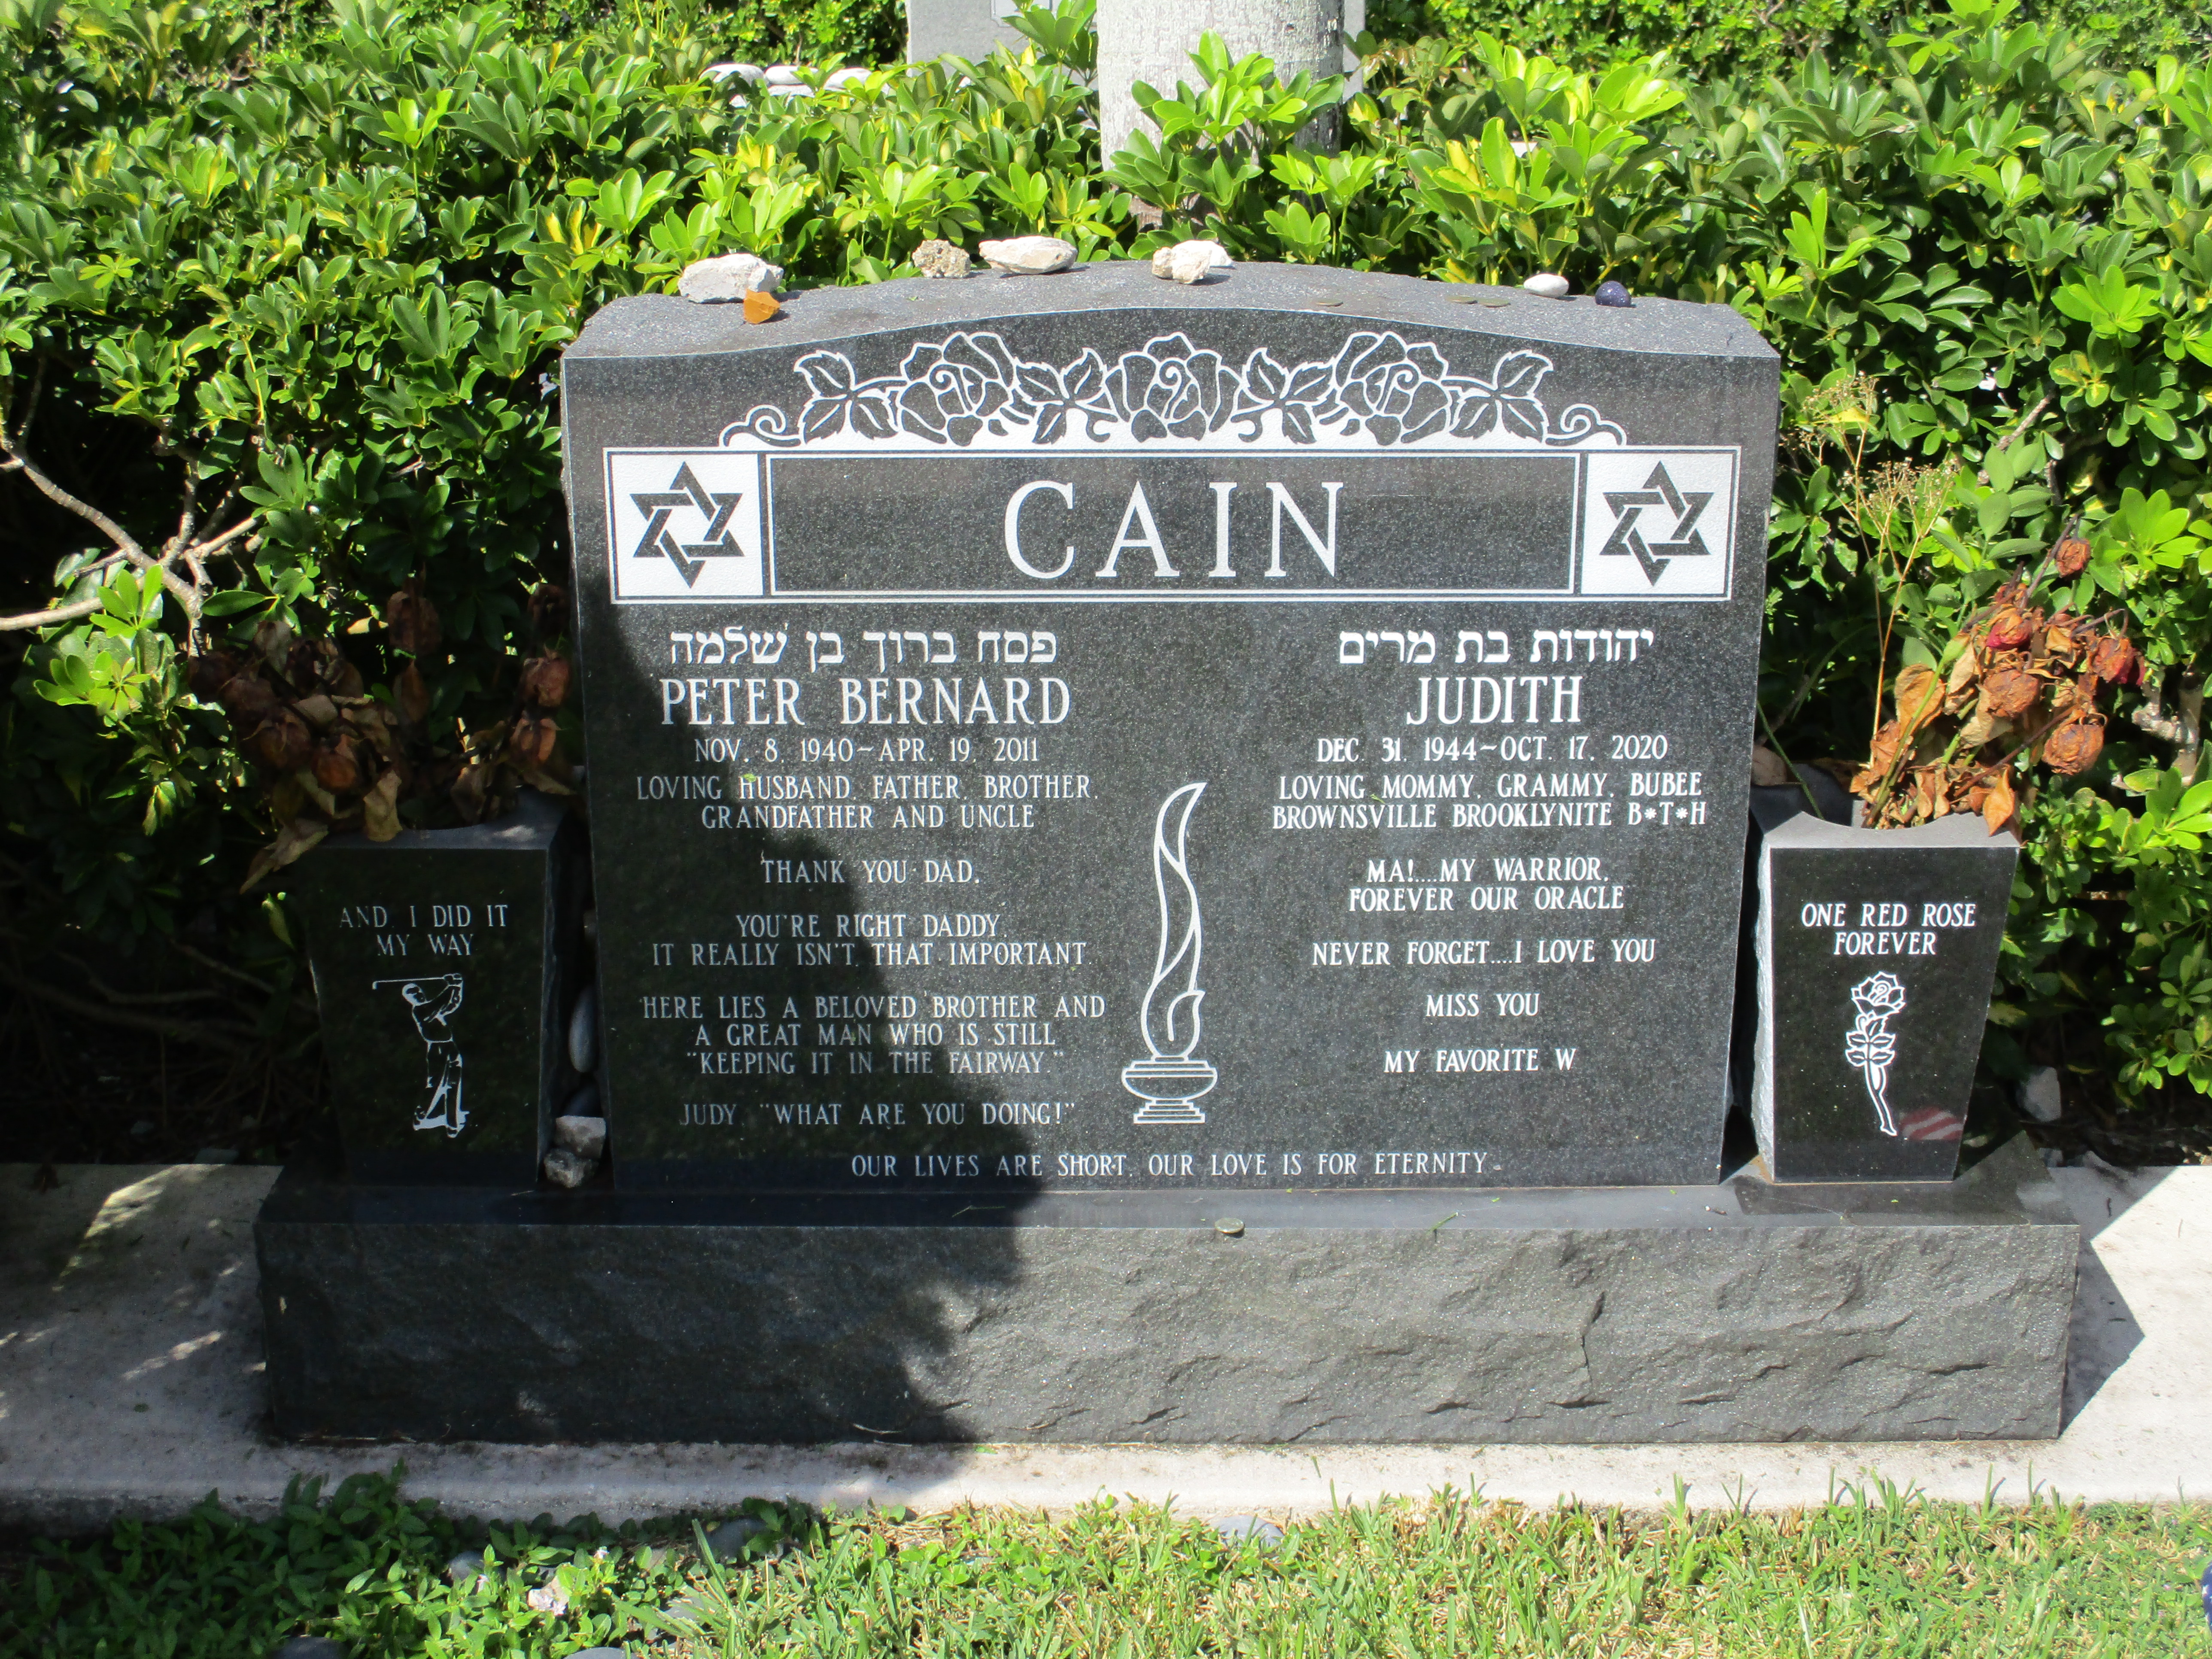 Judith Cain